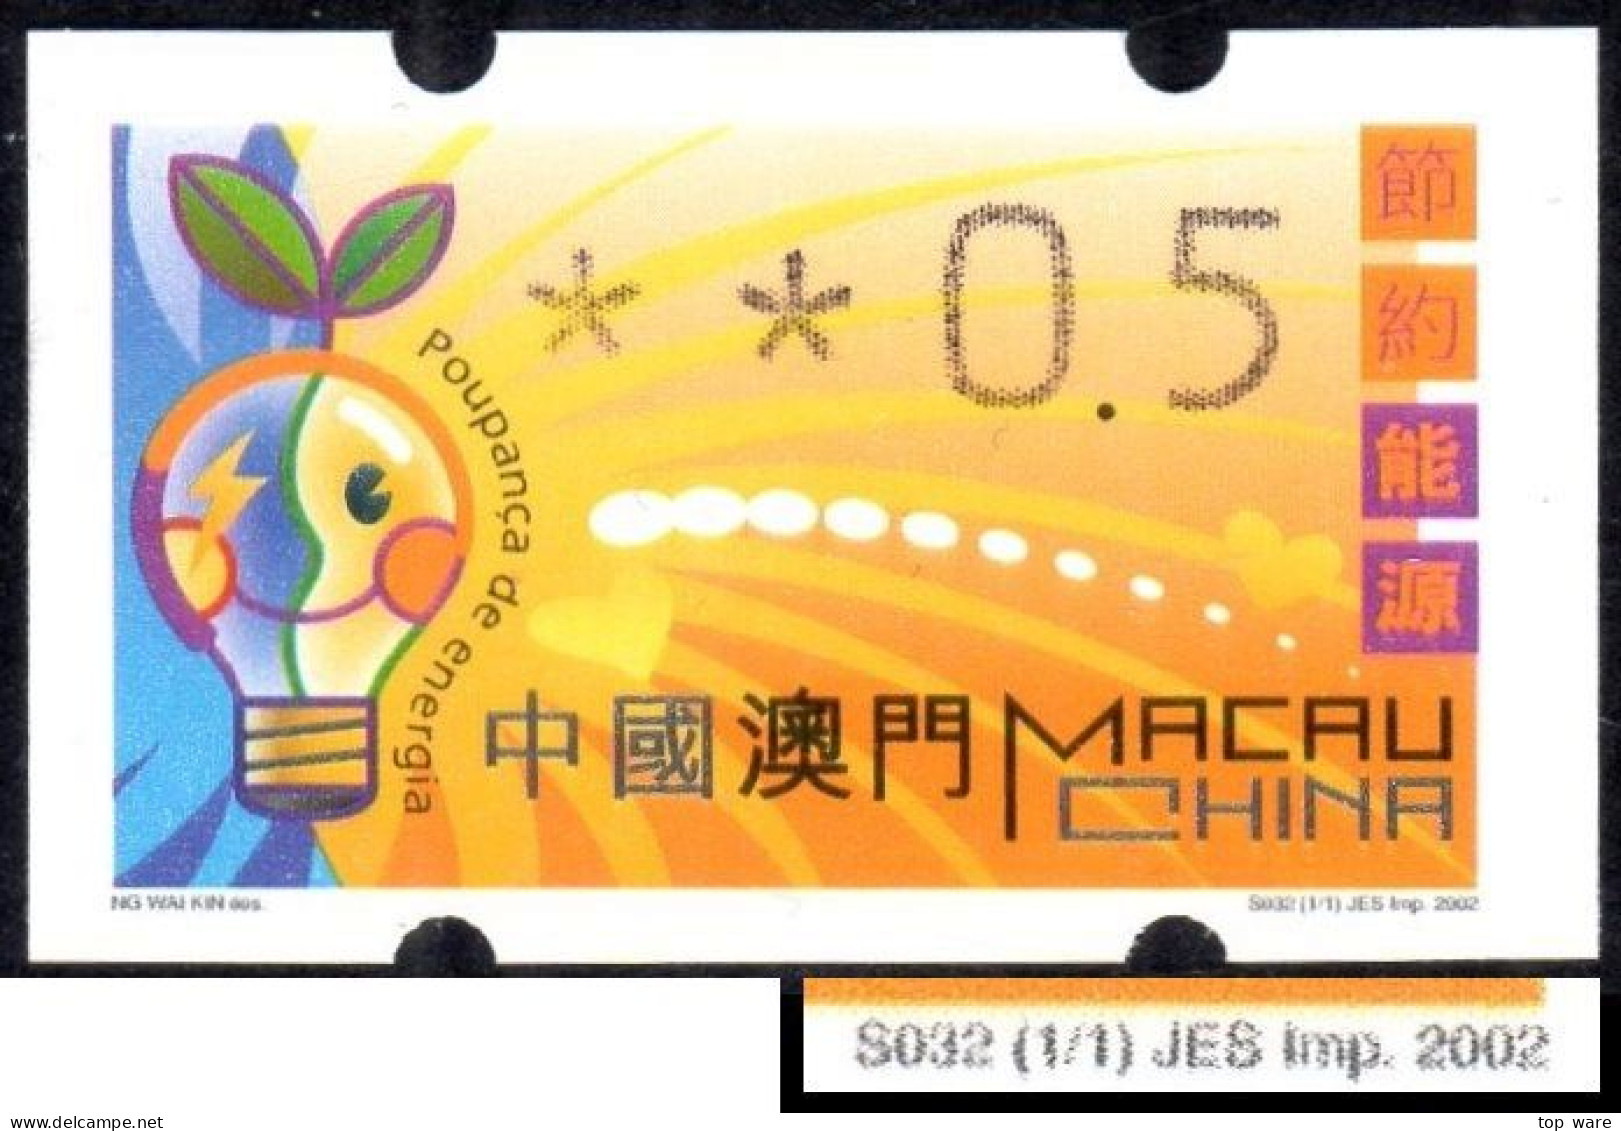 2002 China Macau ATM Stamps Save Energy / MNH / Klussendorf Automatenmarken Etiquetas Automatici Distributeur - Distributori